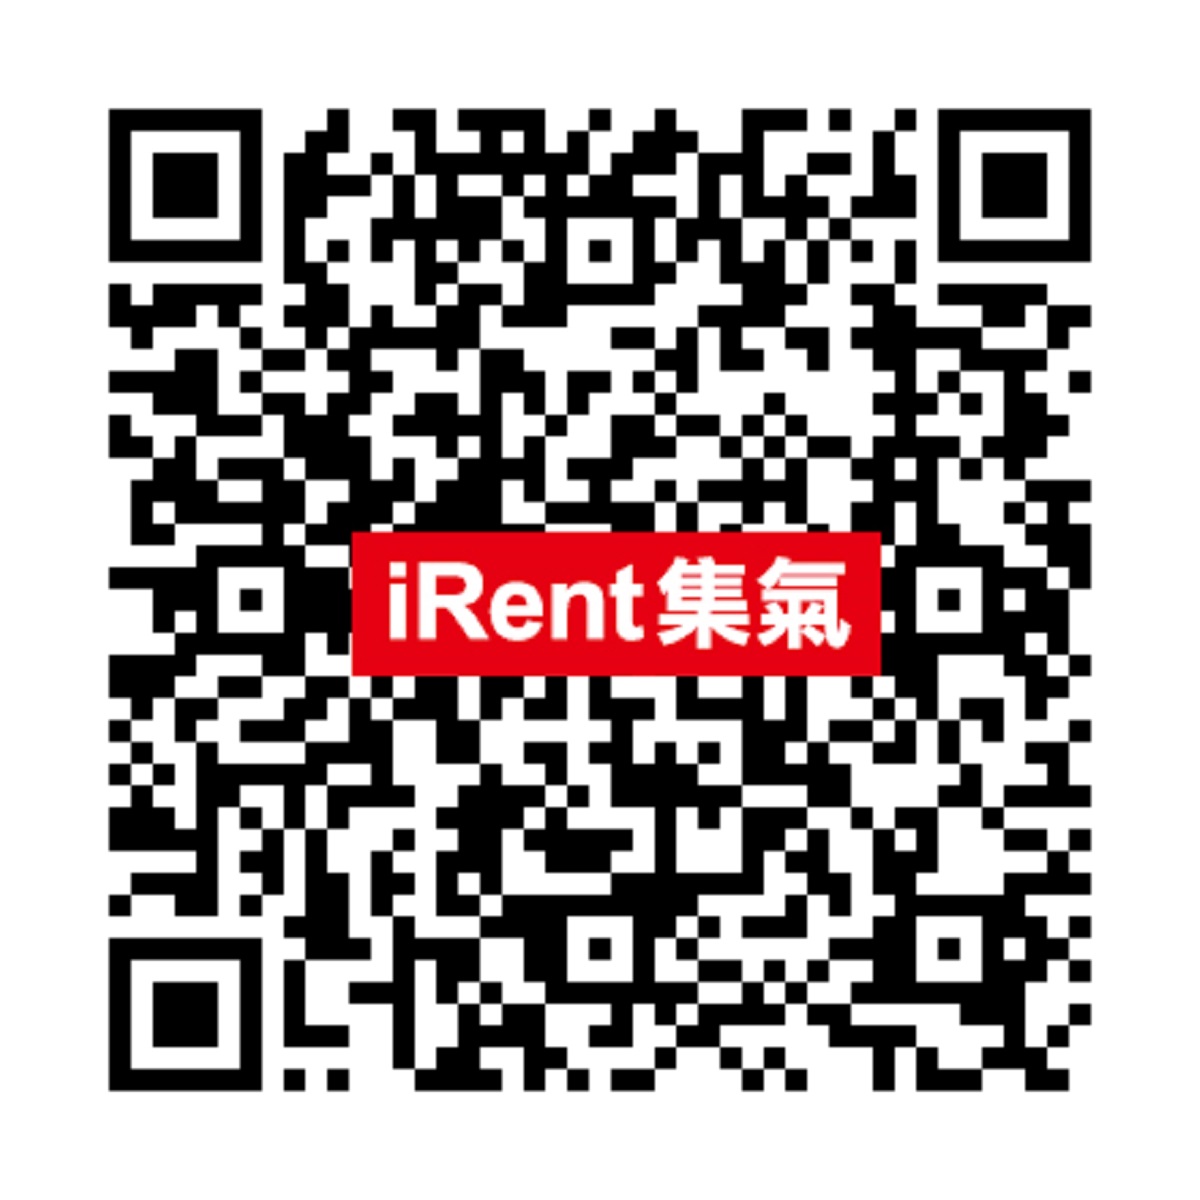 iRent站點集氣活動QR Code.jpg